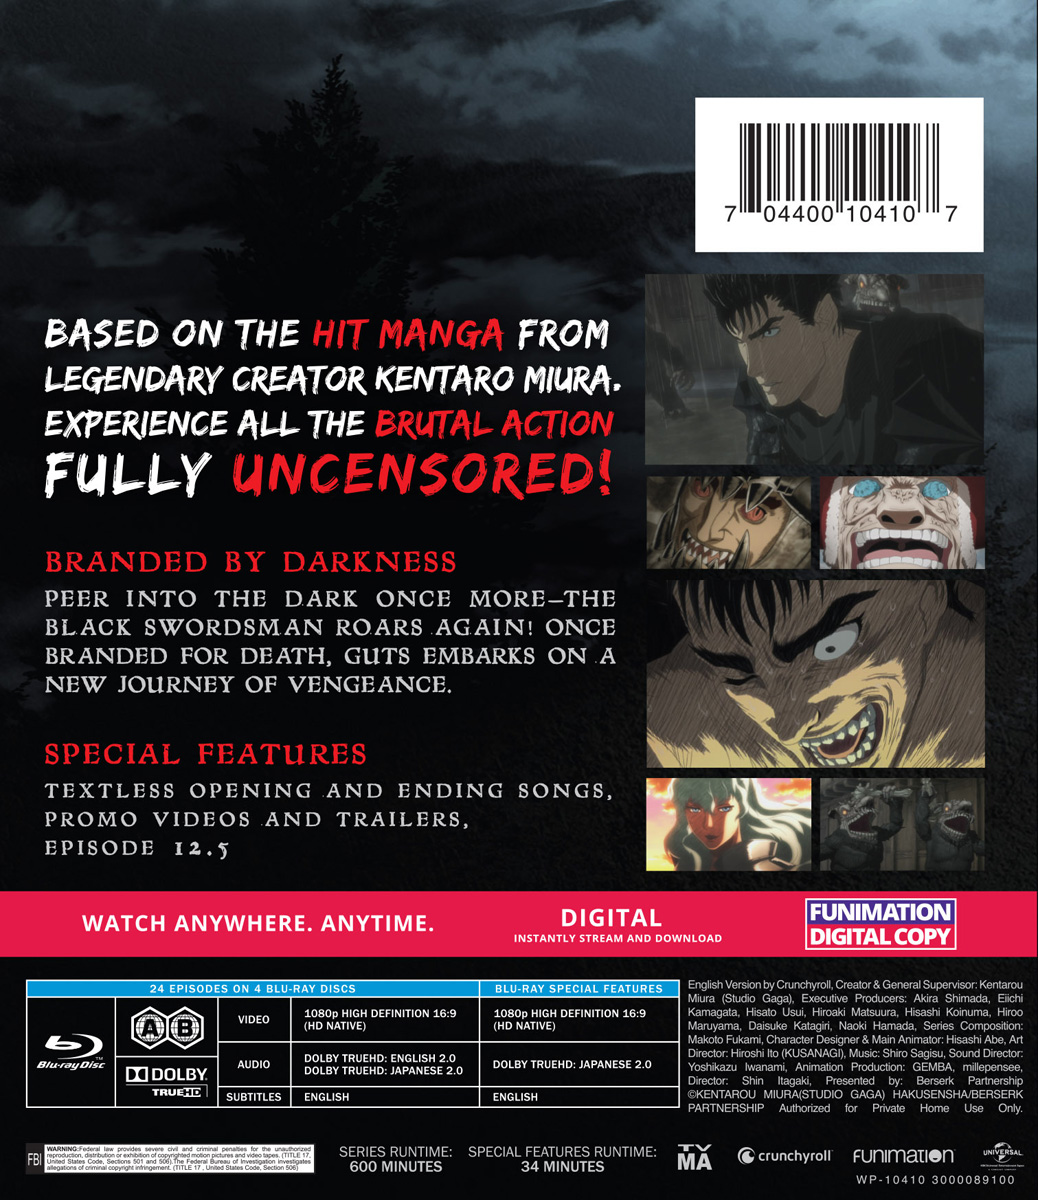  Berserk Collection (Standard Edition) [Blu-ray] : Movies & TV